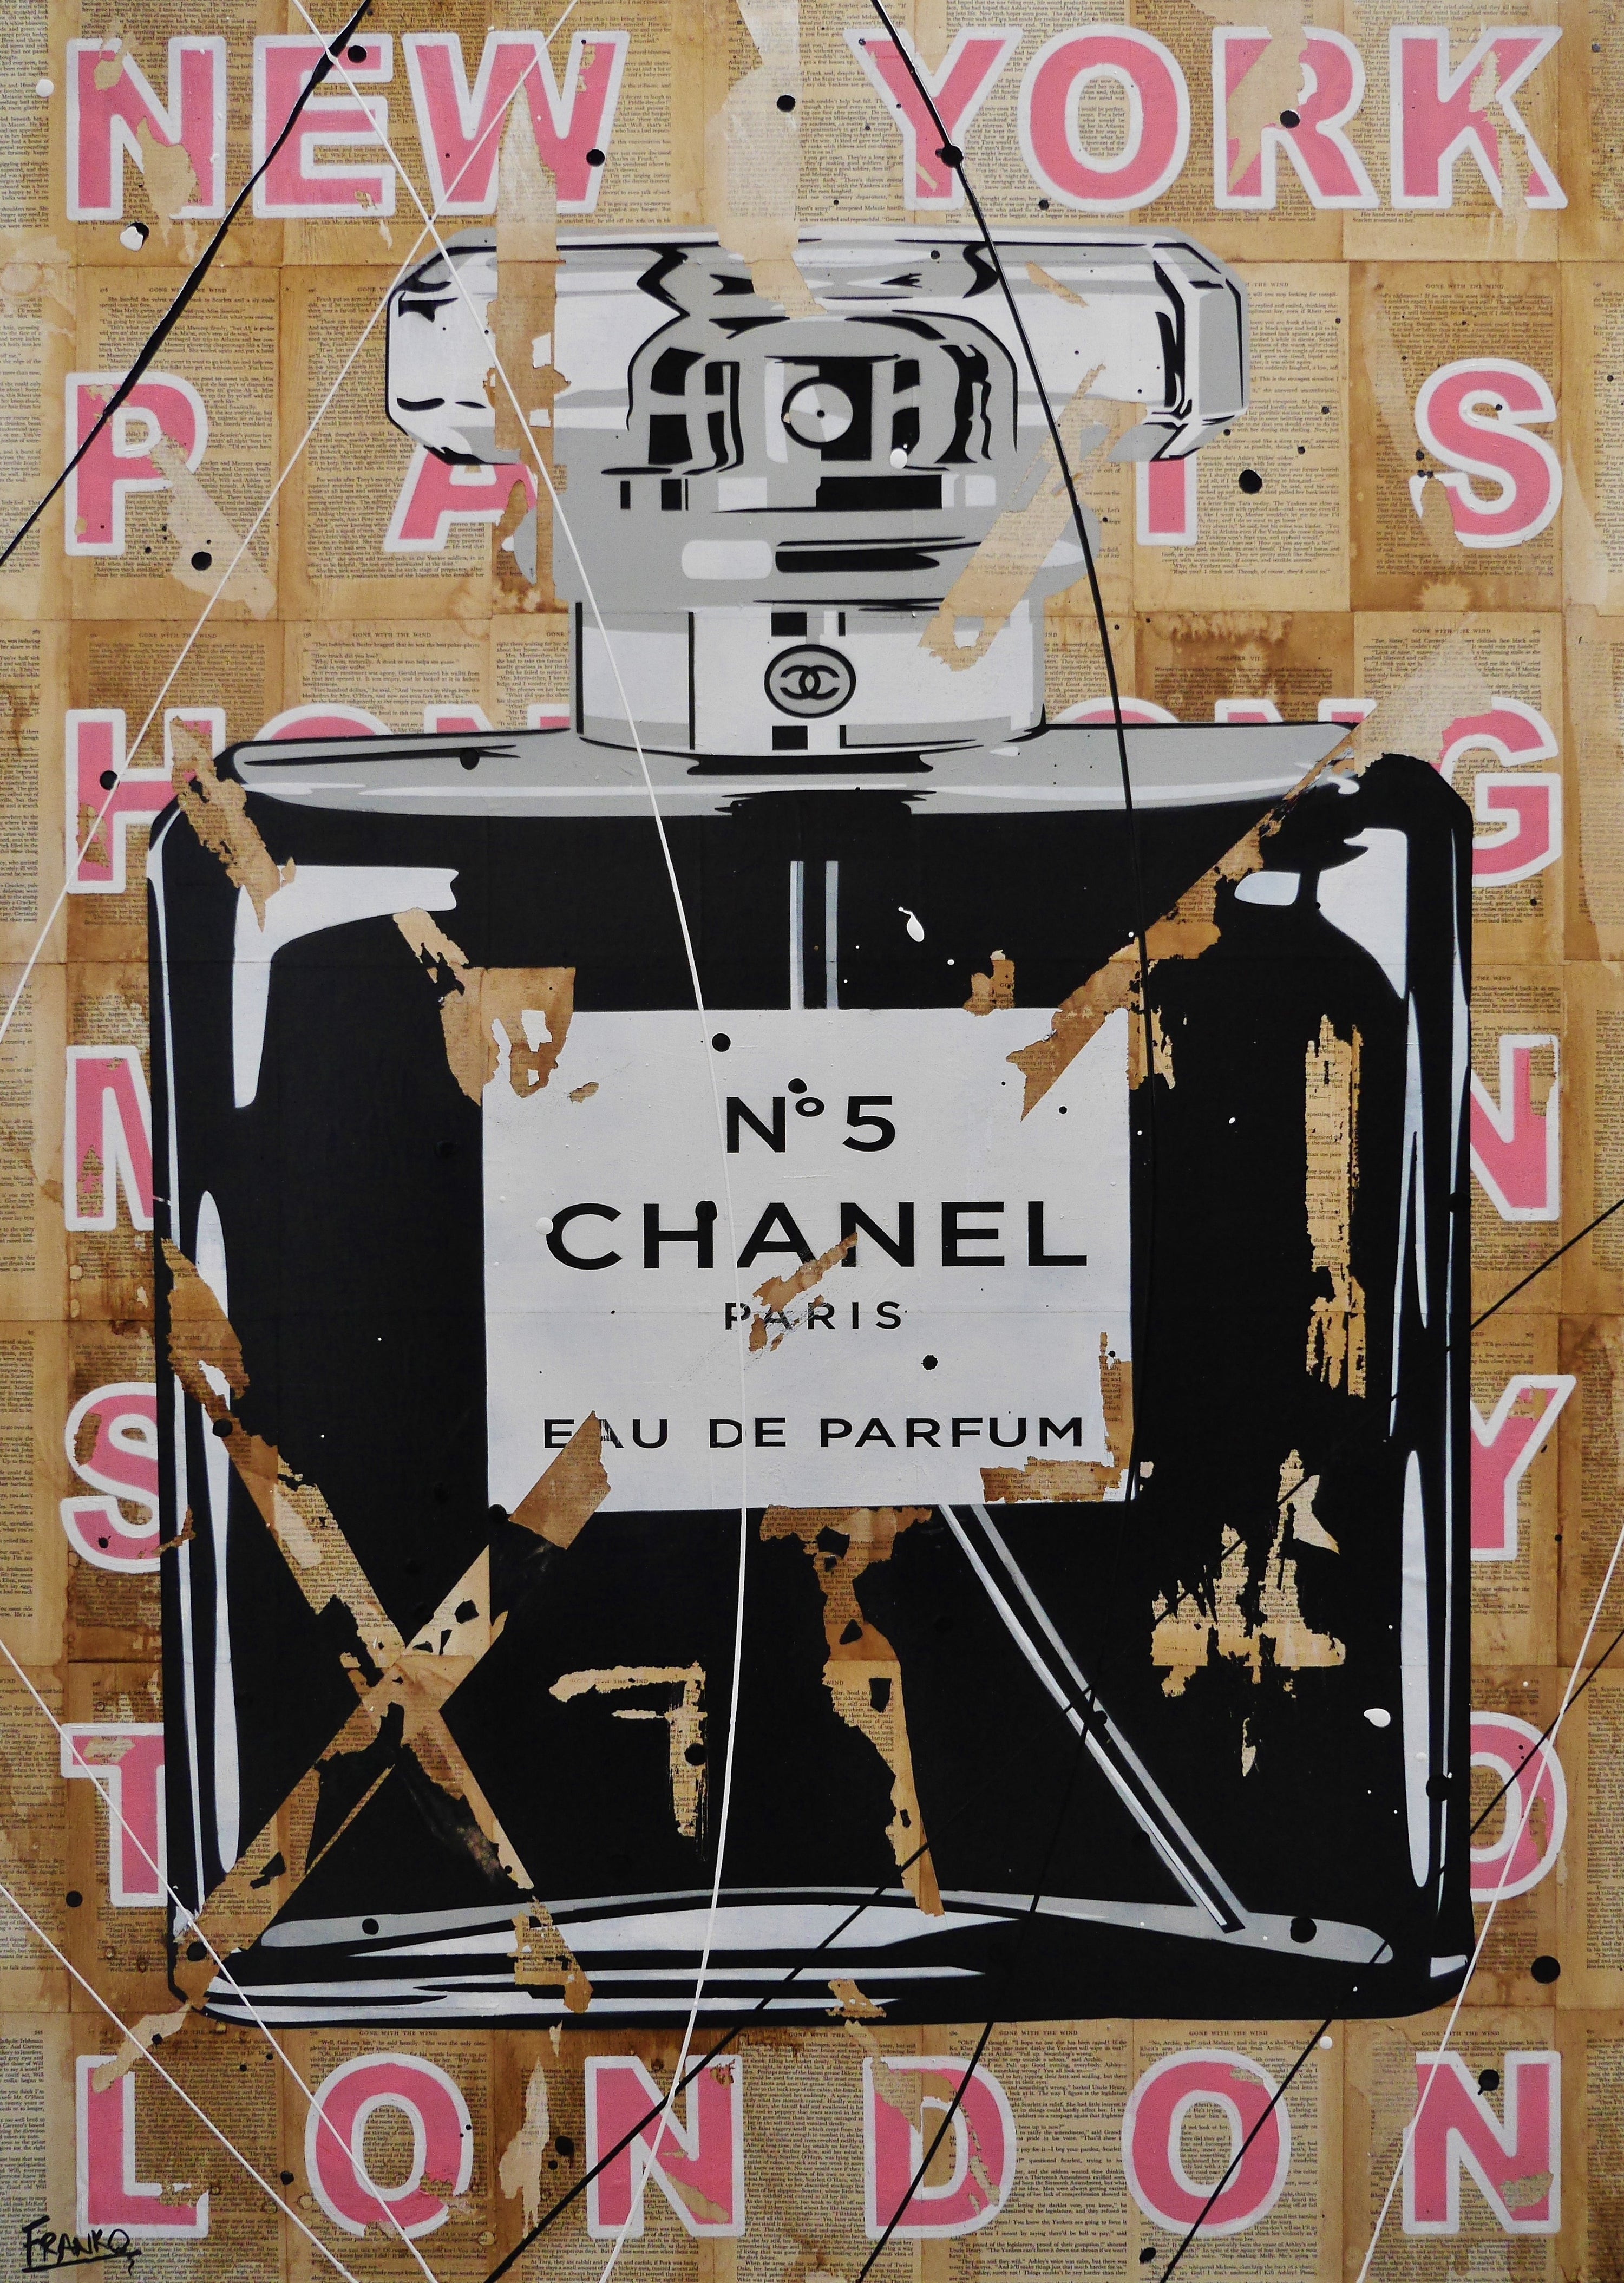 Ripped Fragrances 140cm x 100cm Chanel Perfume Bottle Urban Pop Book Club Painting (SOLD)